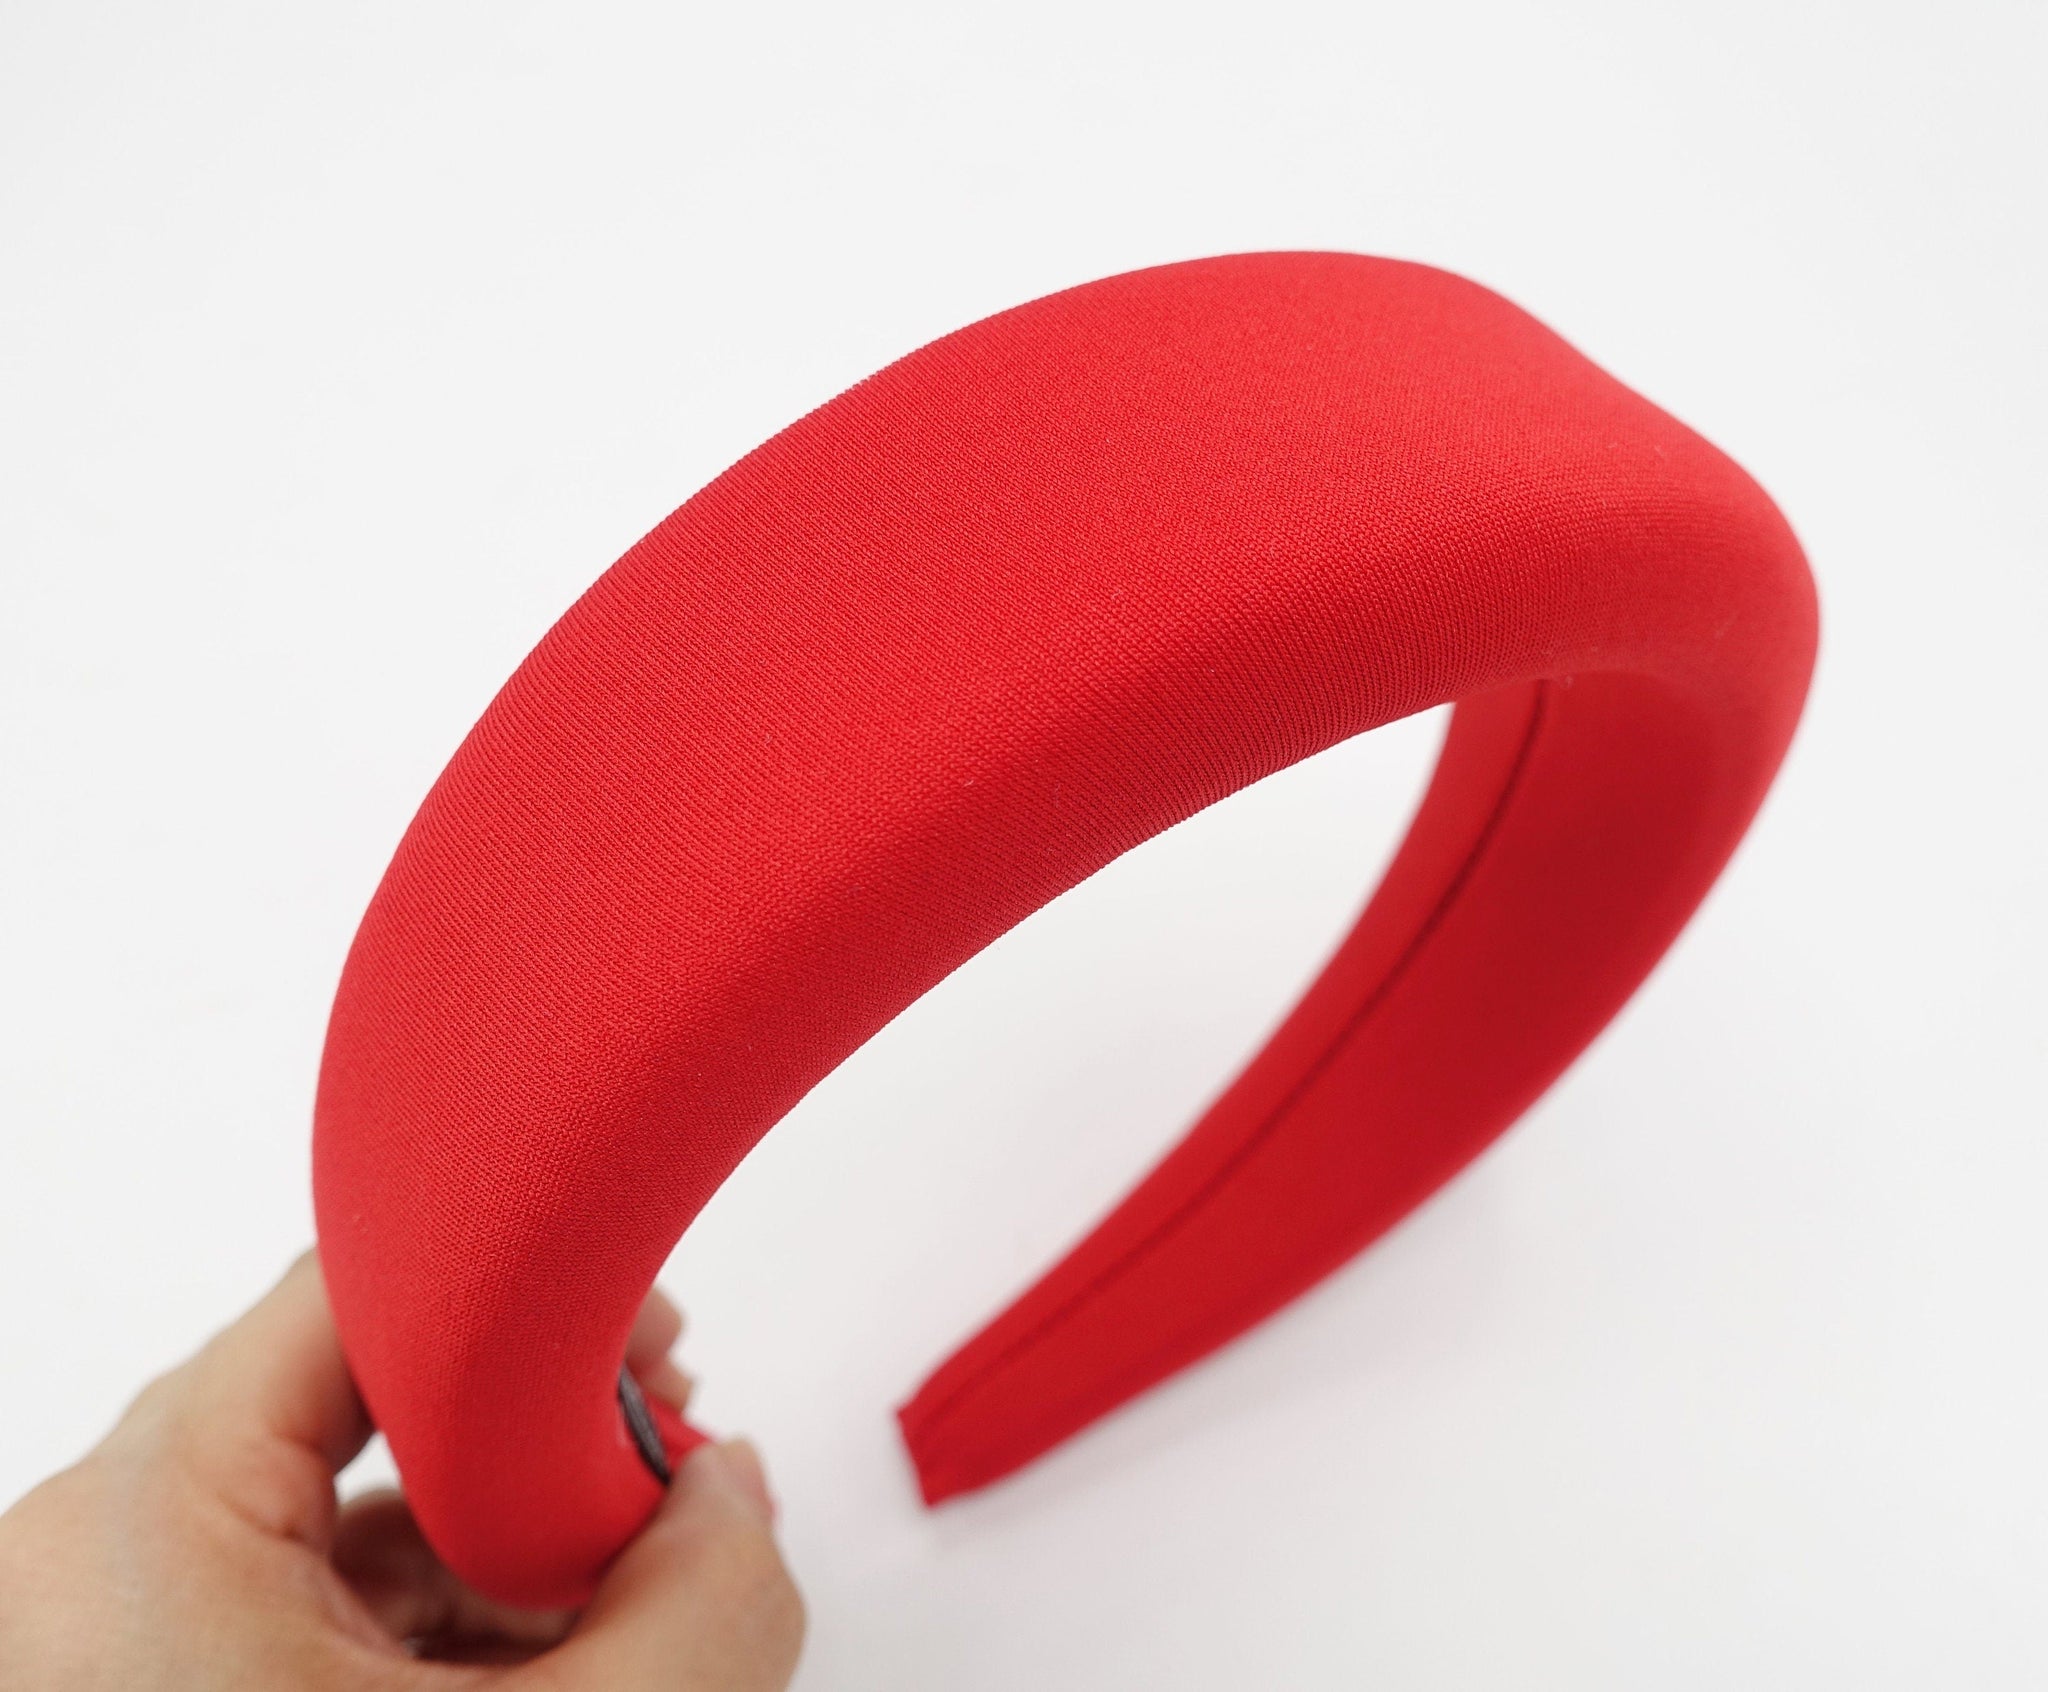 veryshine.com Headband Red highly padded headband trendy simple hairband hair accessory for women